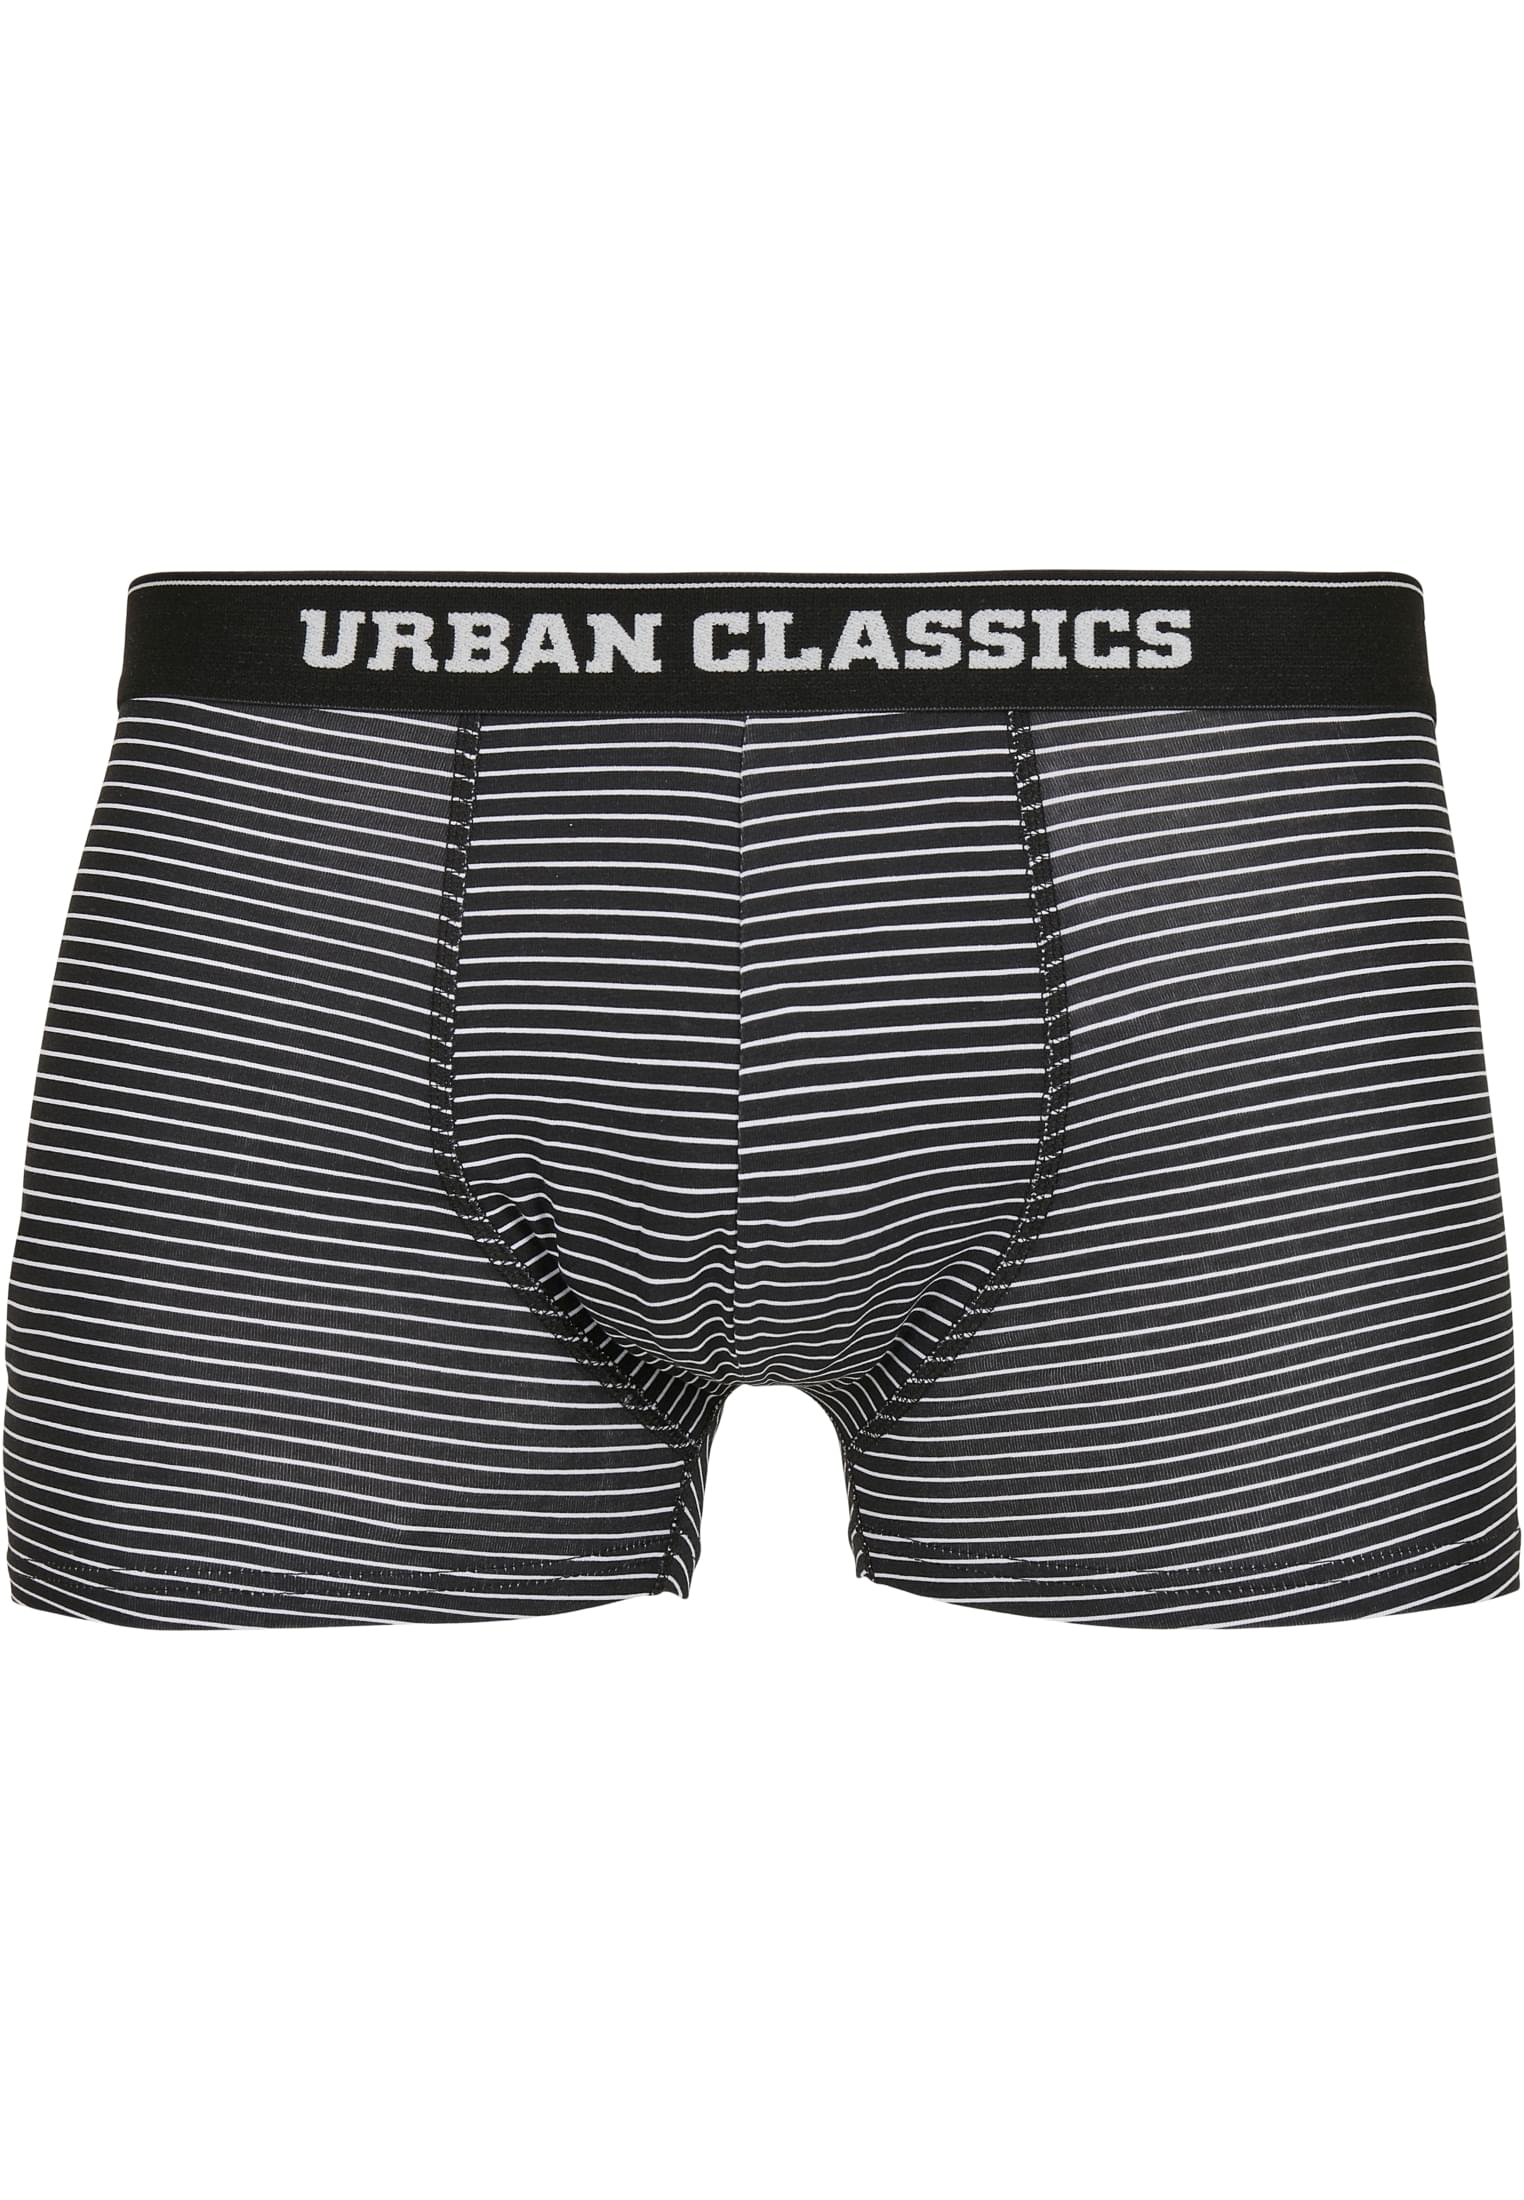 Accessories Organic Boxer Shorts 5-Pack in Farbe m.stripeaop+m.aop+blk+asp+wht